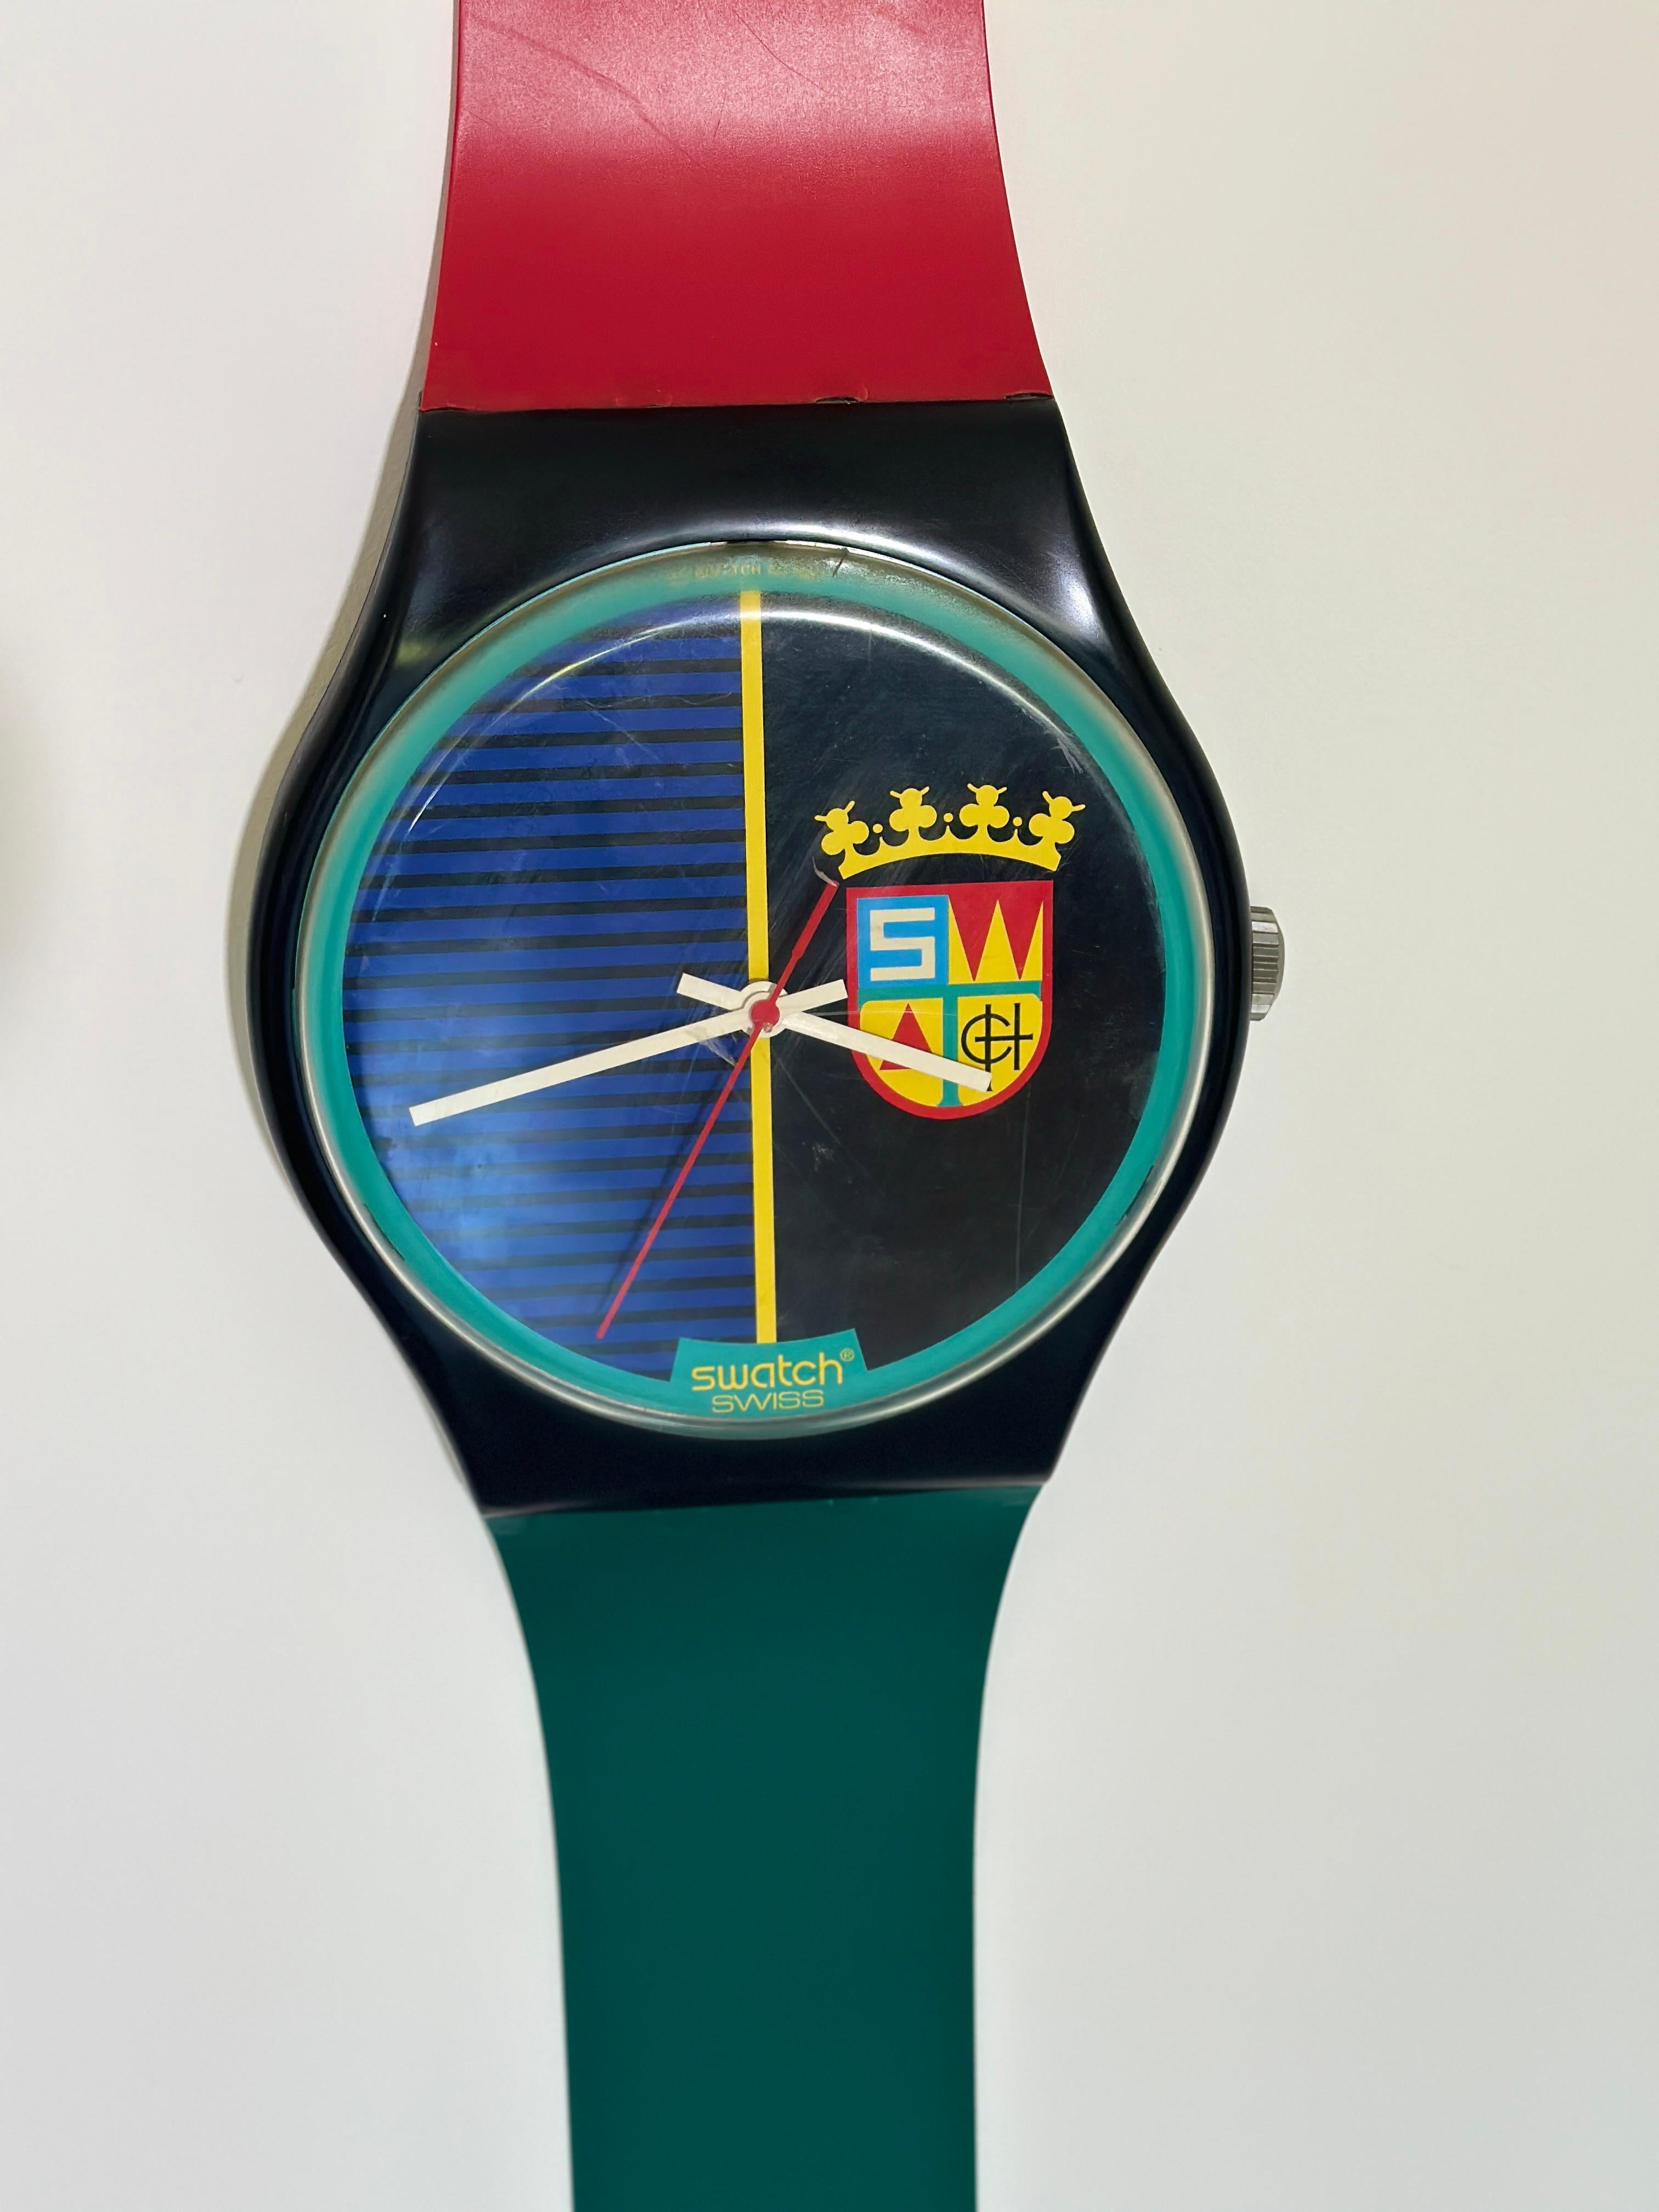 giant swatch watch wall clock